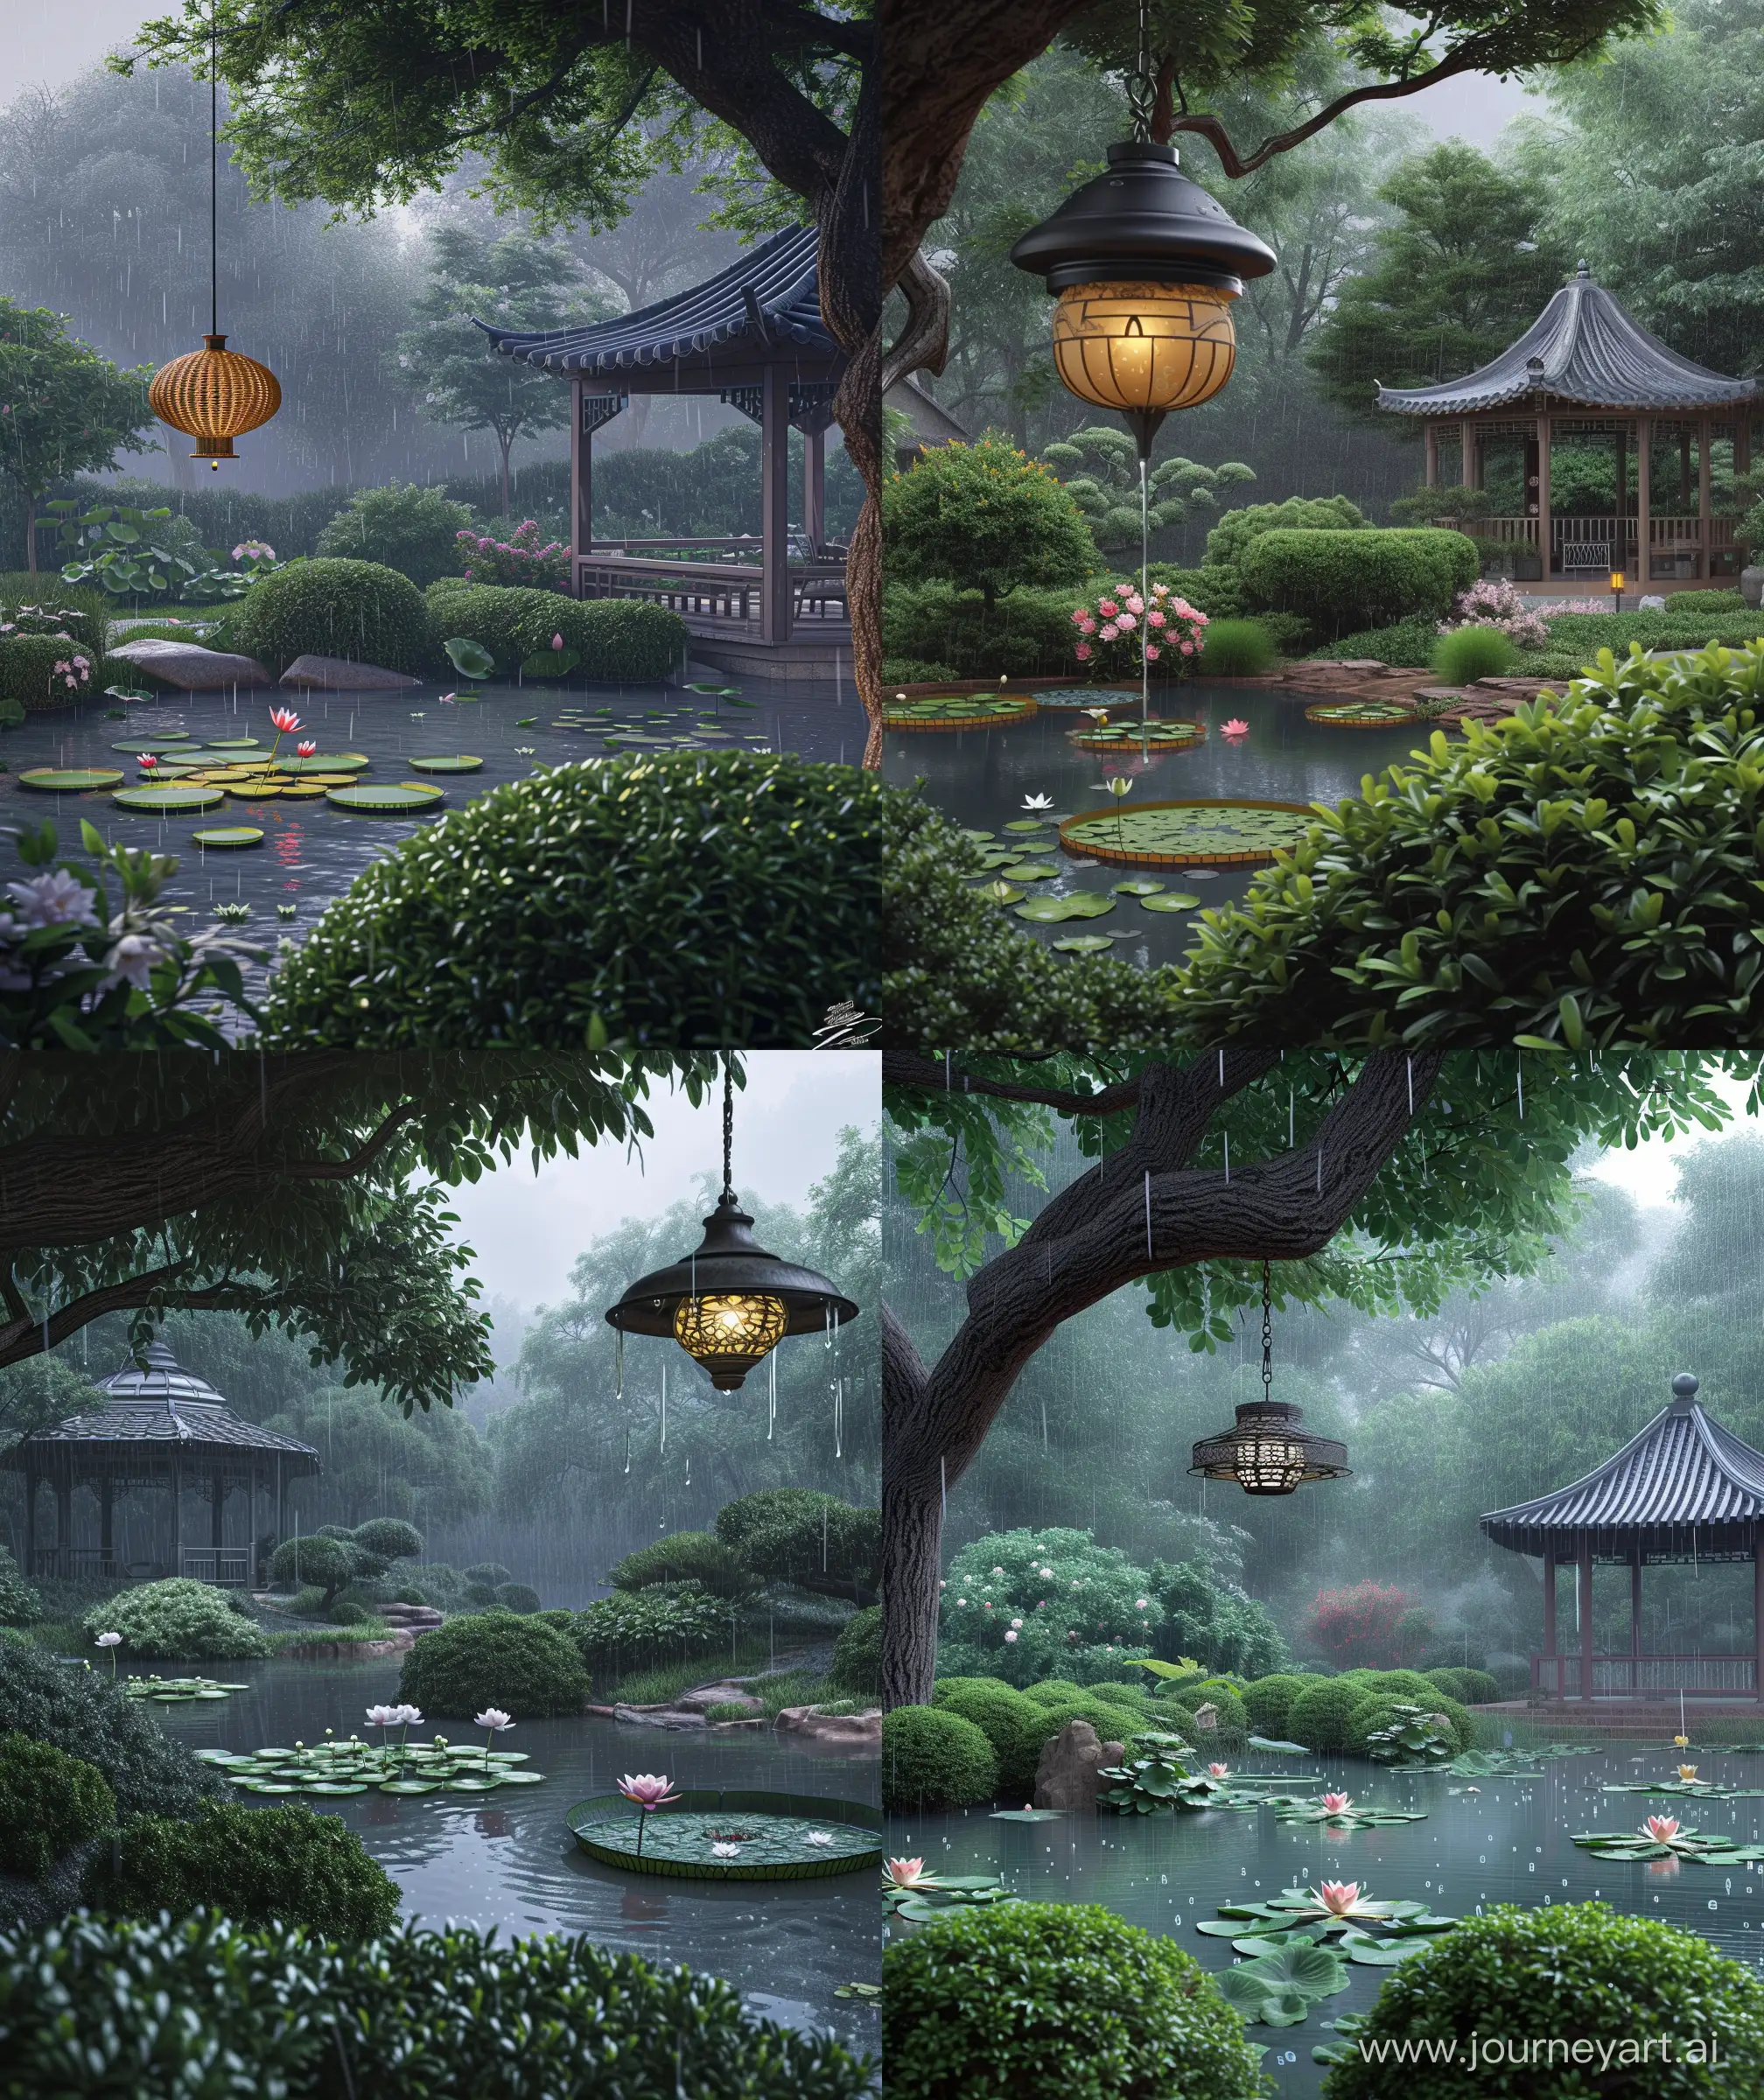 Enchanting-Anime-Garden-Scene-with-Raindrops-and-Gazebo